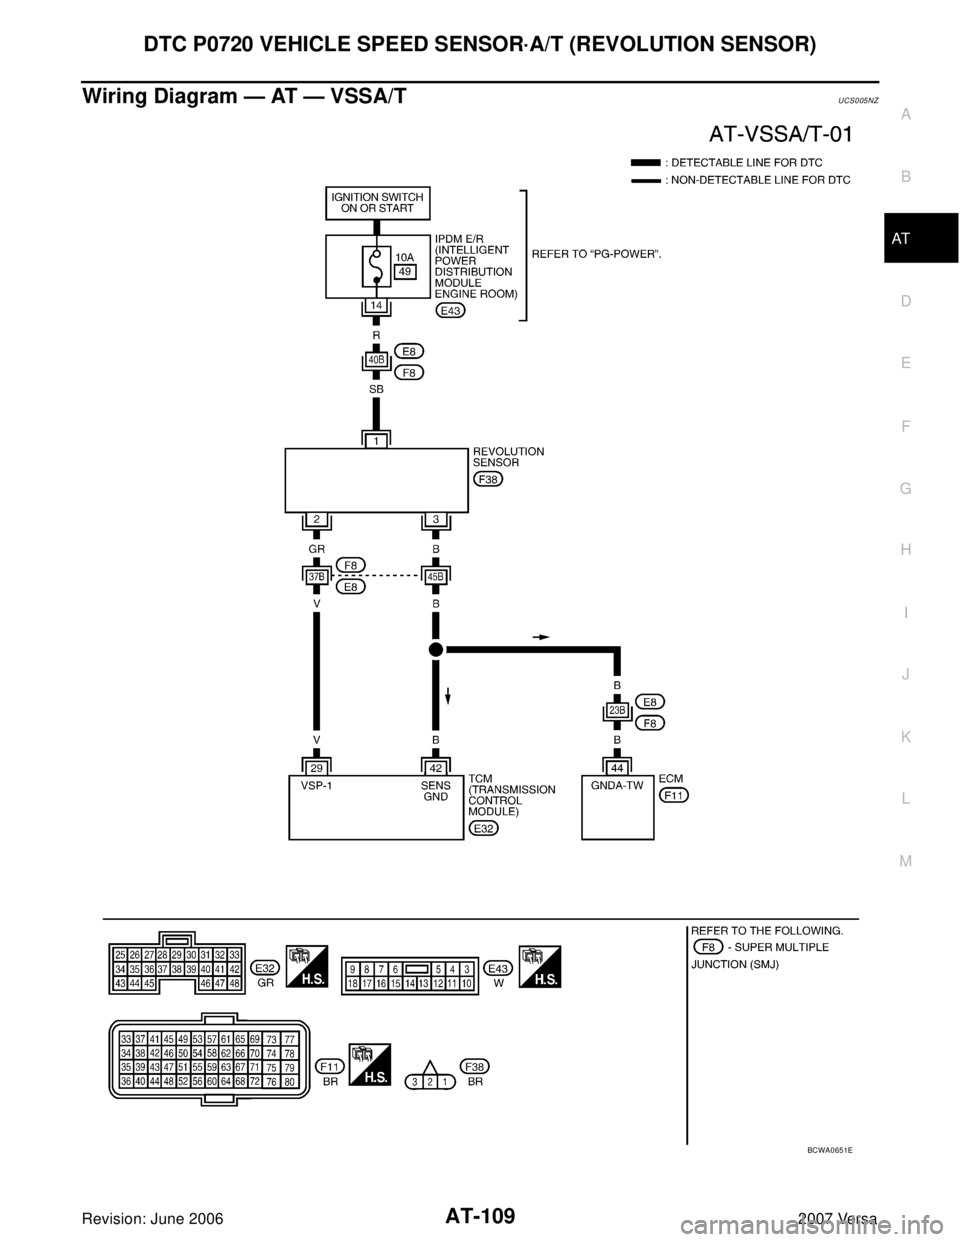 NISSAN VERSA 2006  Workshop  Service Repair Manual DTC P0720 VEHICLE SPEED SENSOR·A/T (REVOLUTION SENSOR)
AT-109
D
E
F
G
H
I
J
K
L
MA
B
AT
Revision: June 20062007 Versa
Wiring Diagram — AT — VSSA/TUCS005NZ
BCWA0651E 